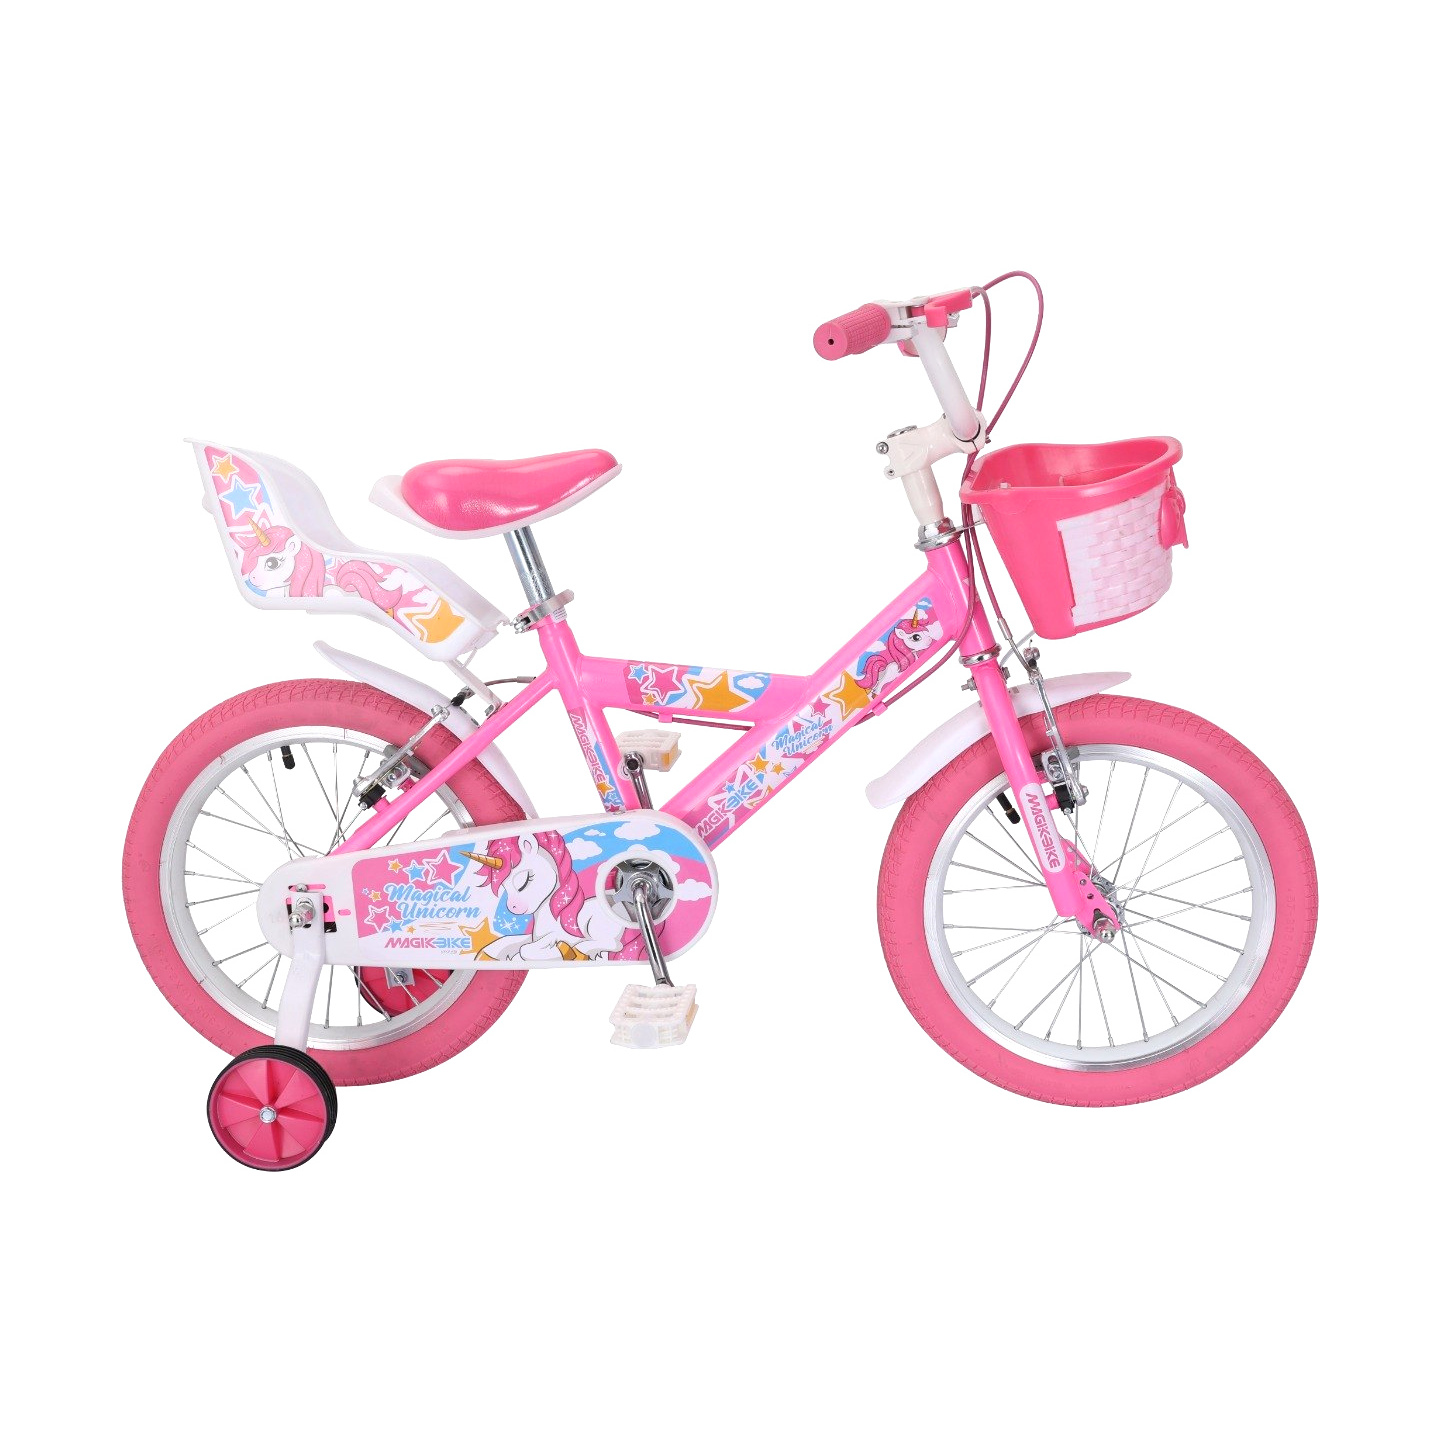 Bicicleta Niños 16 Pulgadas Magikbike Unicorn 5-7 Años - rosa - 